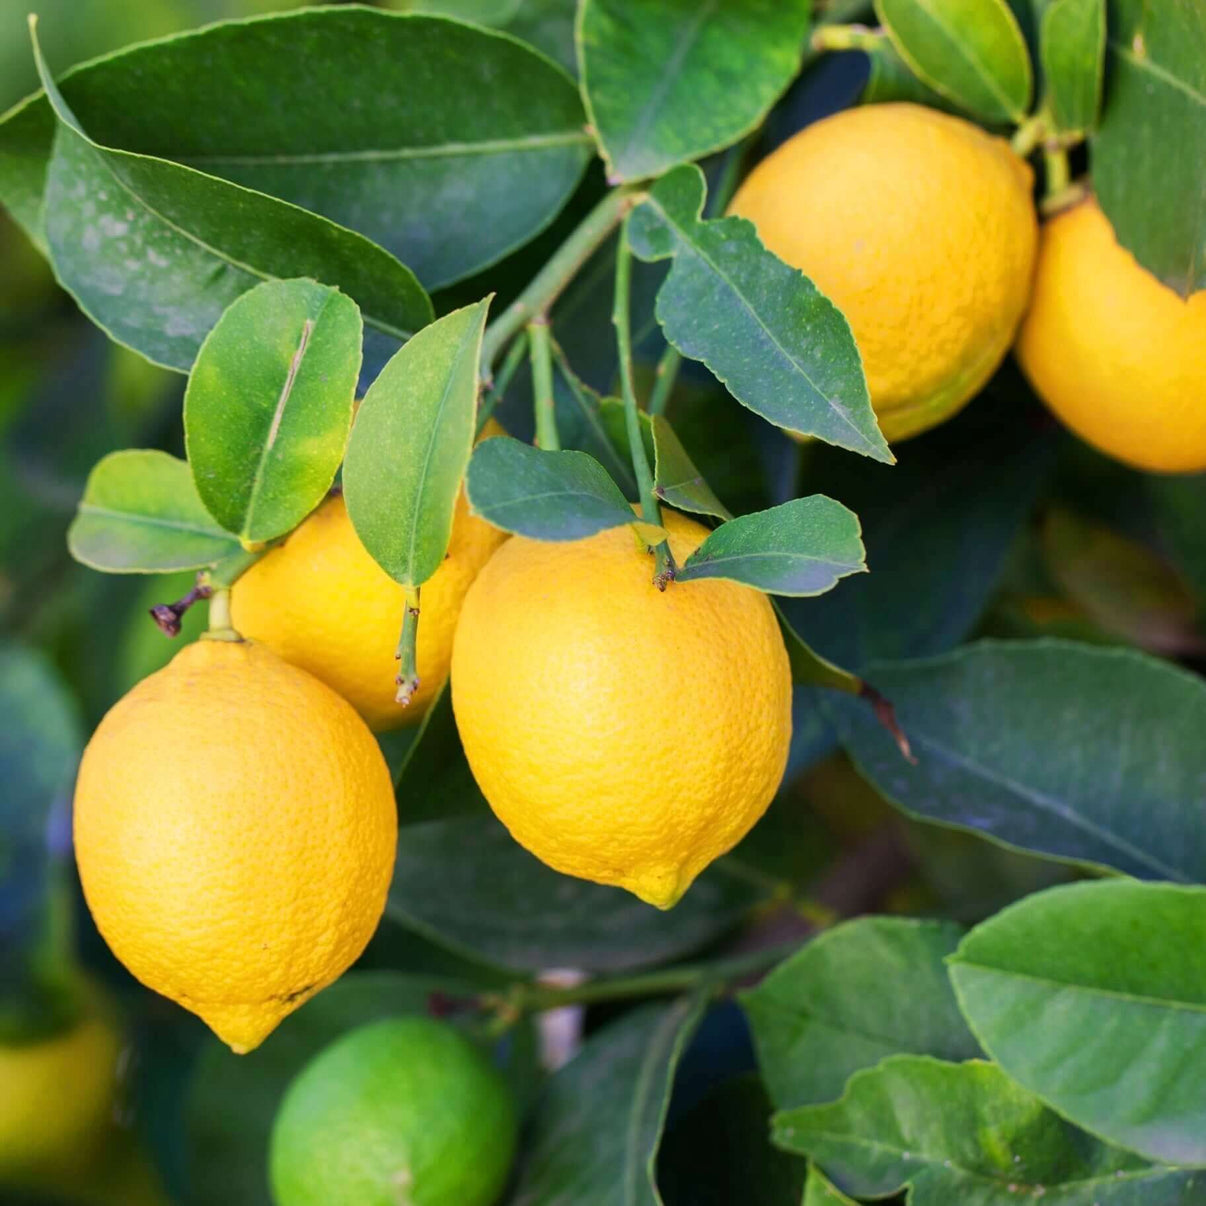 A cluster of ripe Meyer lemons hanging from a Meyer lemon tree.